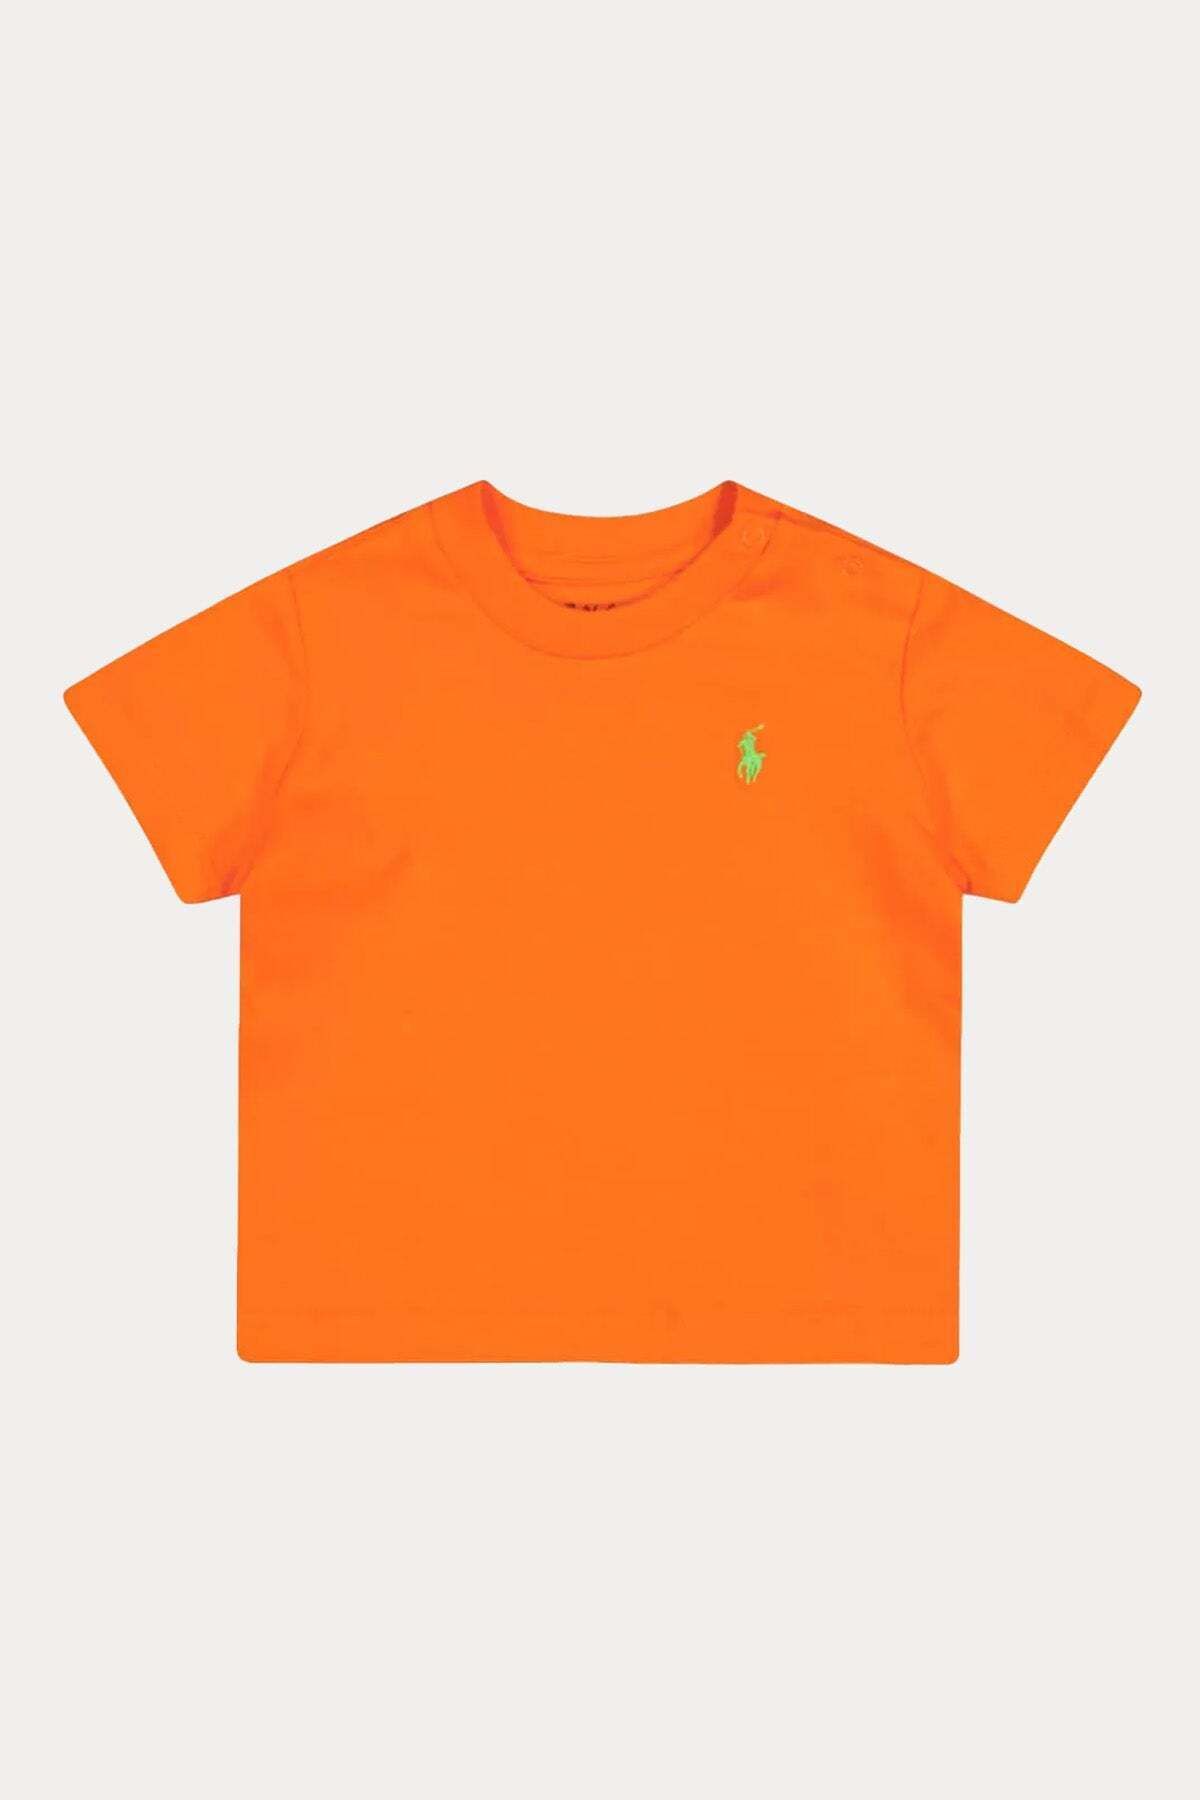 Ralph Lauren 9-18 Aylık Unisex Bebek Yuvarlak Yaka T-shirt 9m / Turuncu